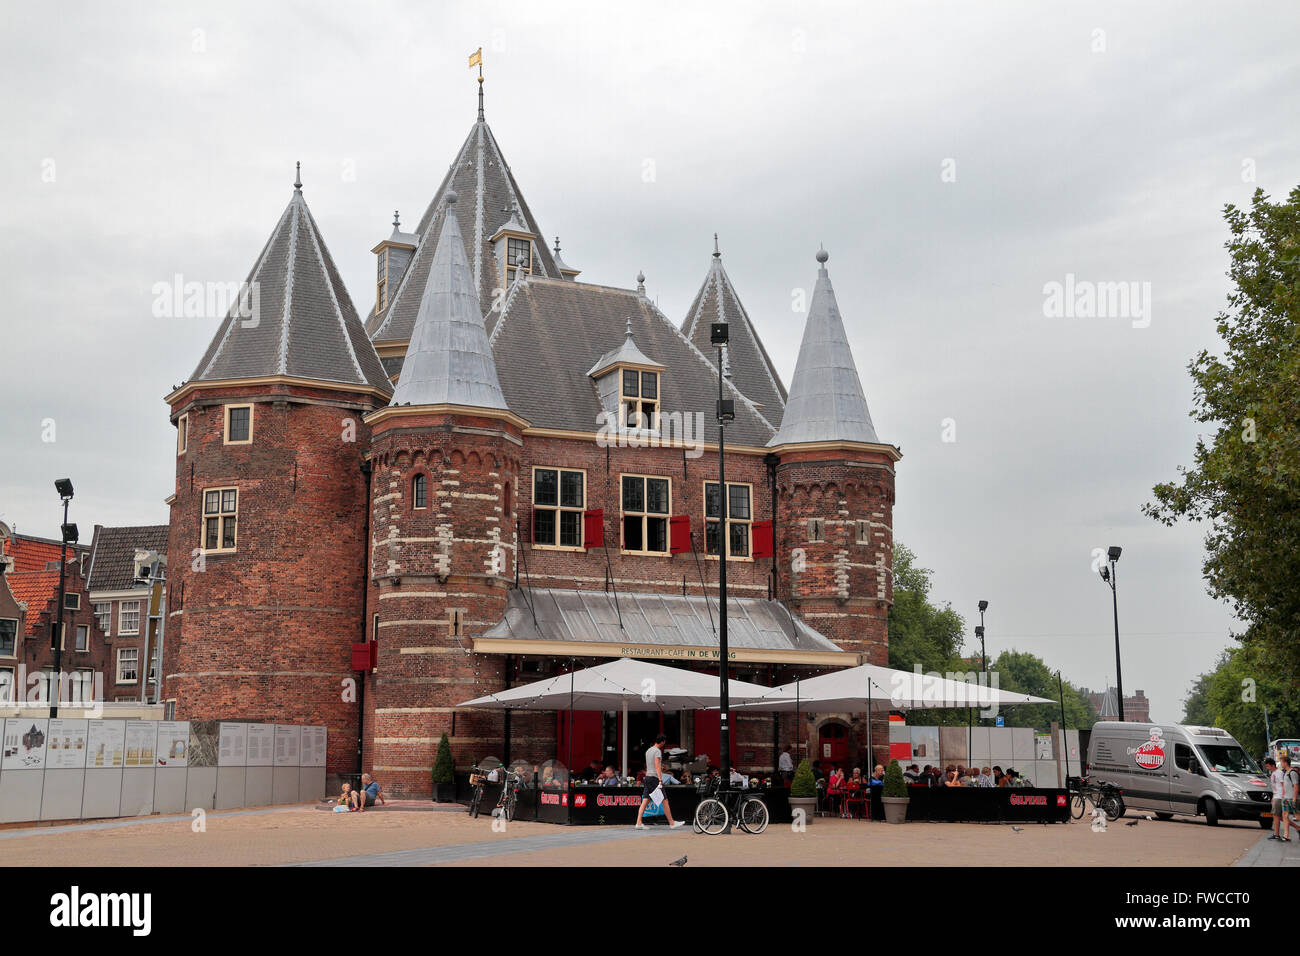 The restaurant Cafe in De Waag, Nieuwmarkt square in Amsterdam, Netherlands. Stock Photo